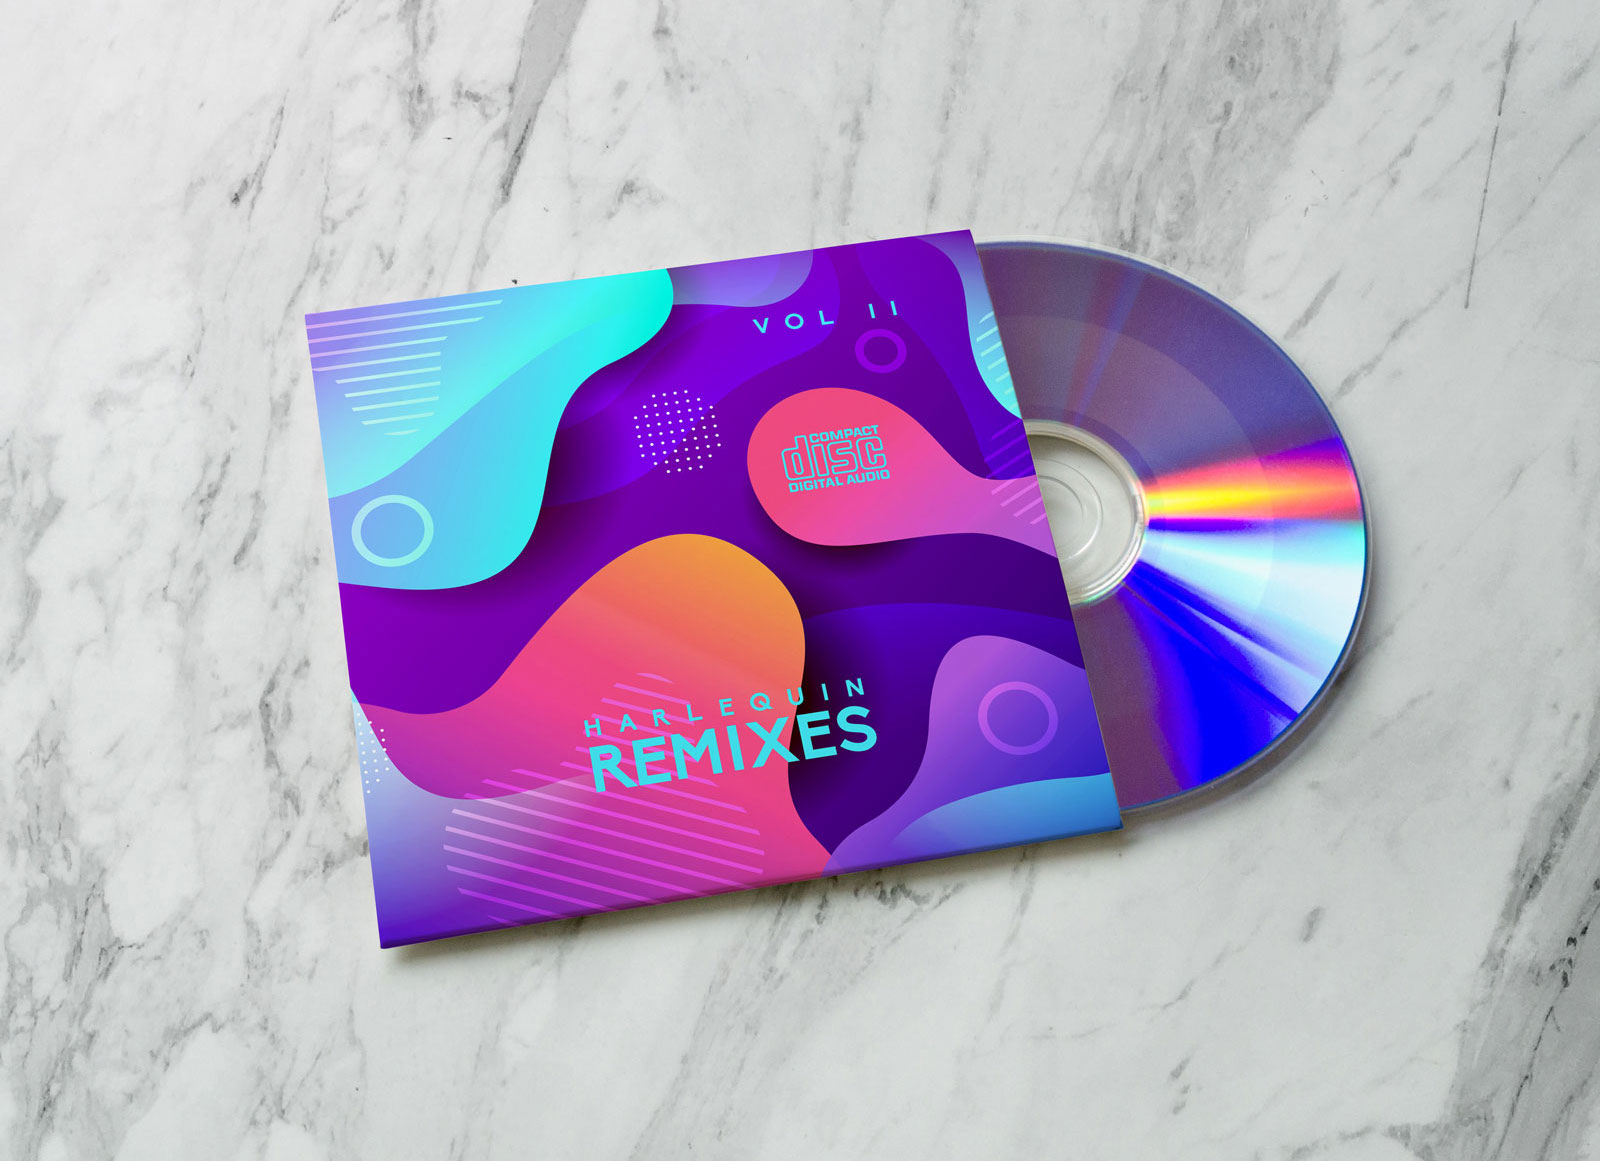 Free-CD-DVD-Envelope-Mockup-PSD